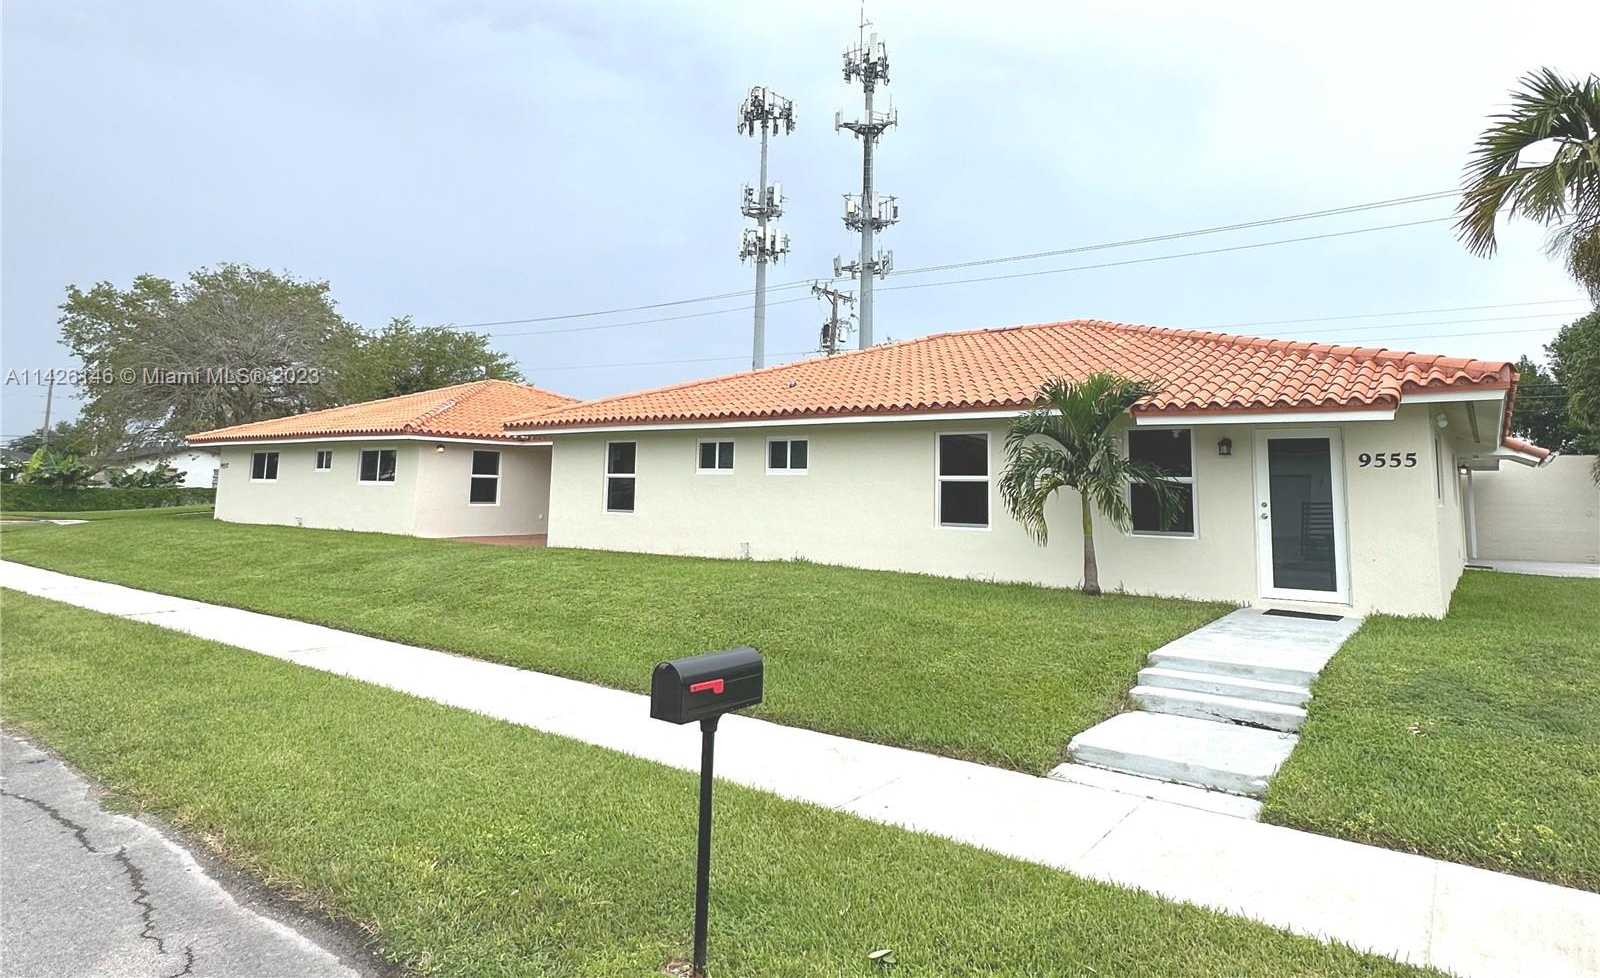 View Miami, FL 33165 multi-family property